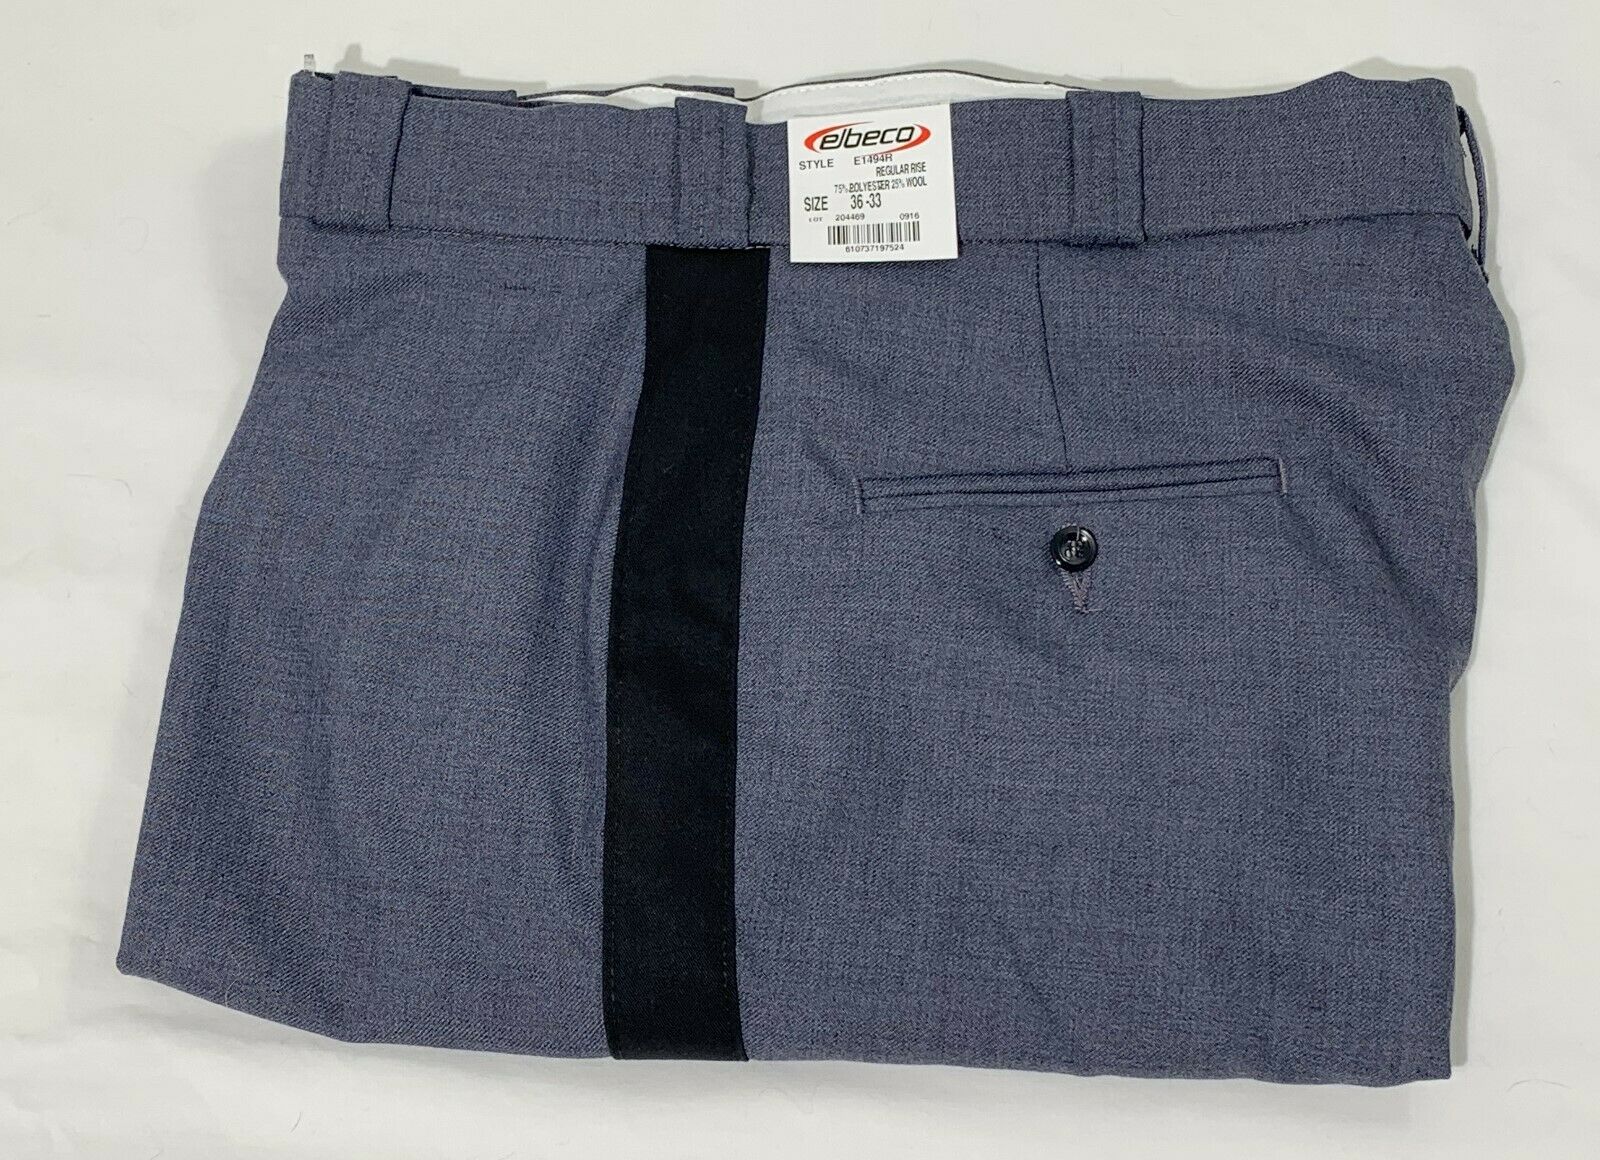 Elbeco Uniform Pants E1494r 75% Polyester 25% Wool Regular Rise Black Stripe